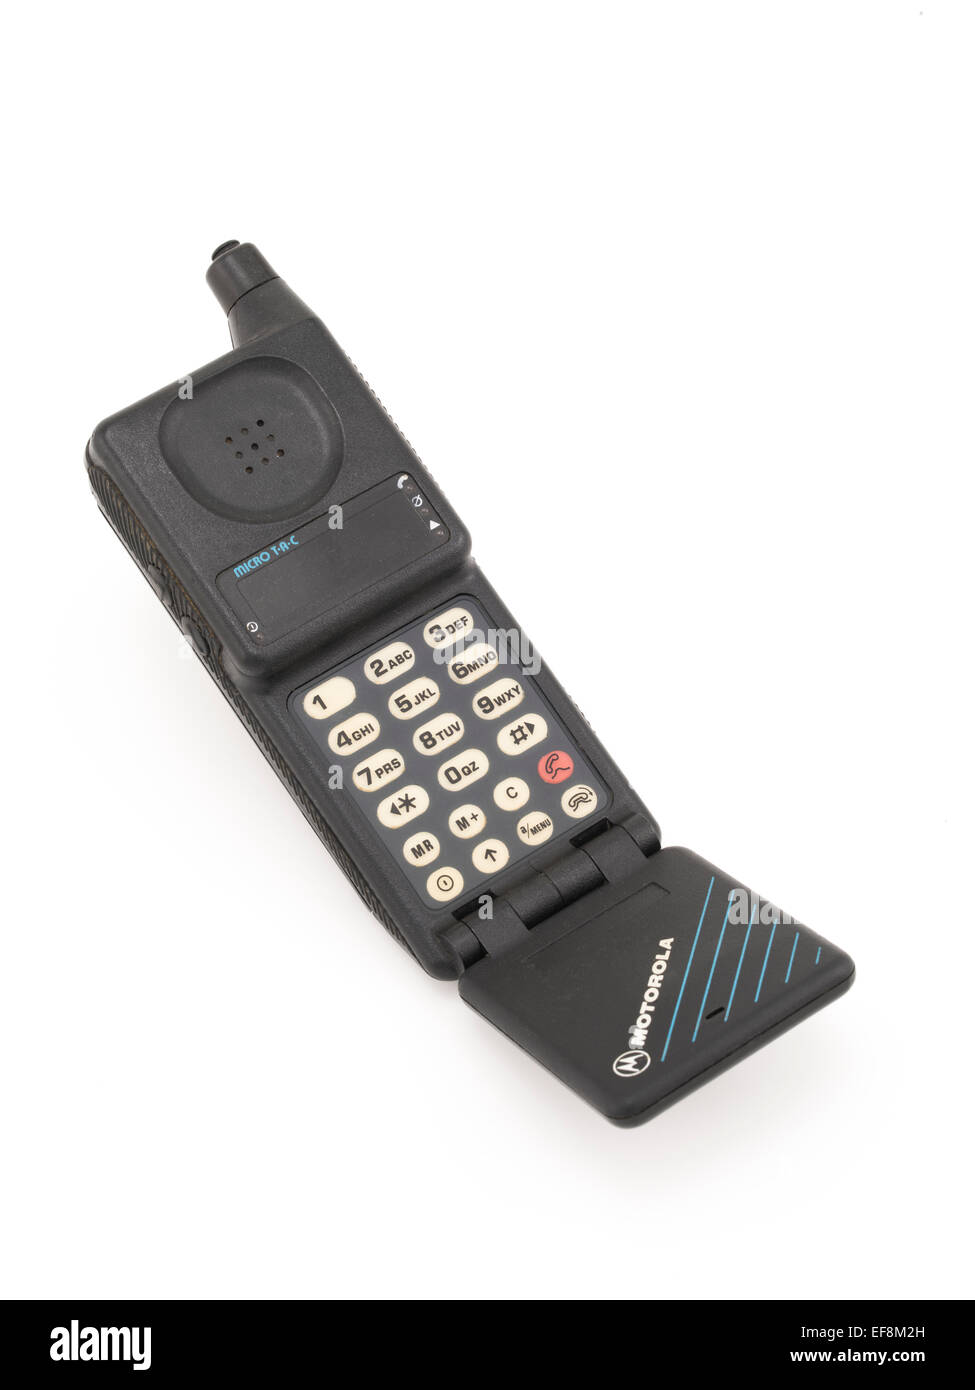 Motorola MicroTAC 9800X pocket cellular telephone. Analog 1989 flip design phone. Stock Photo